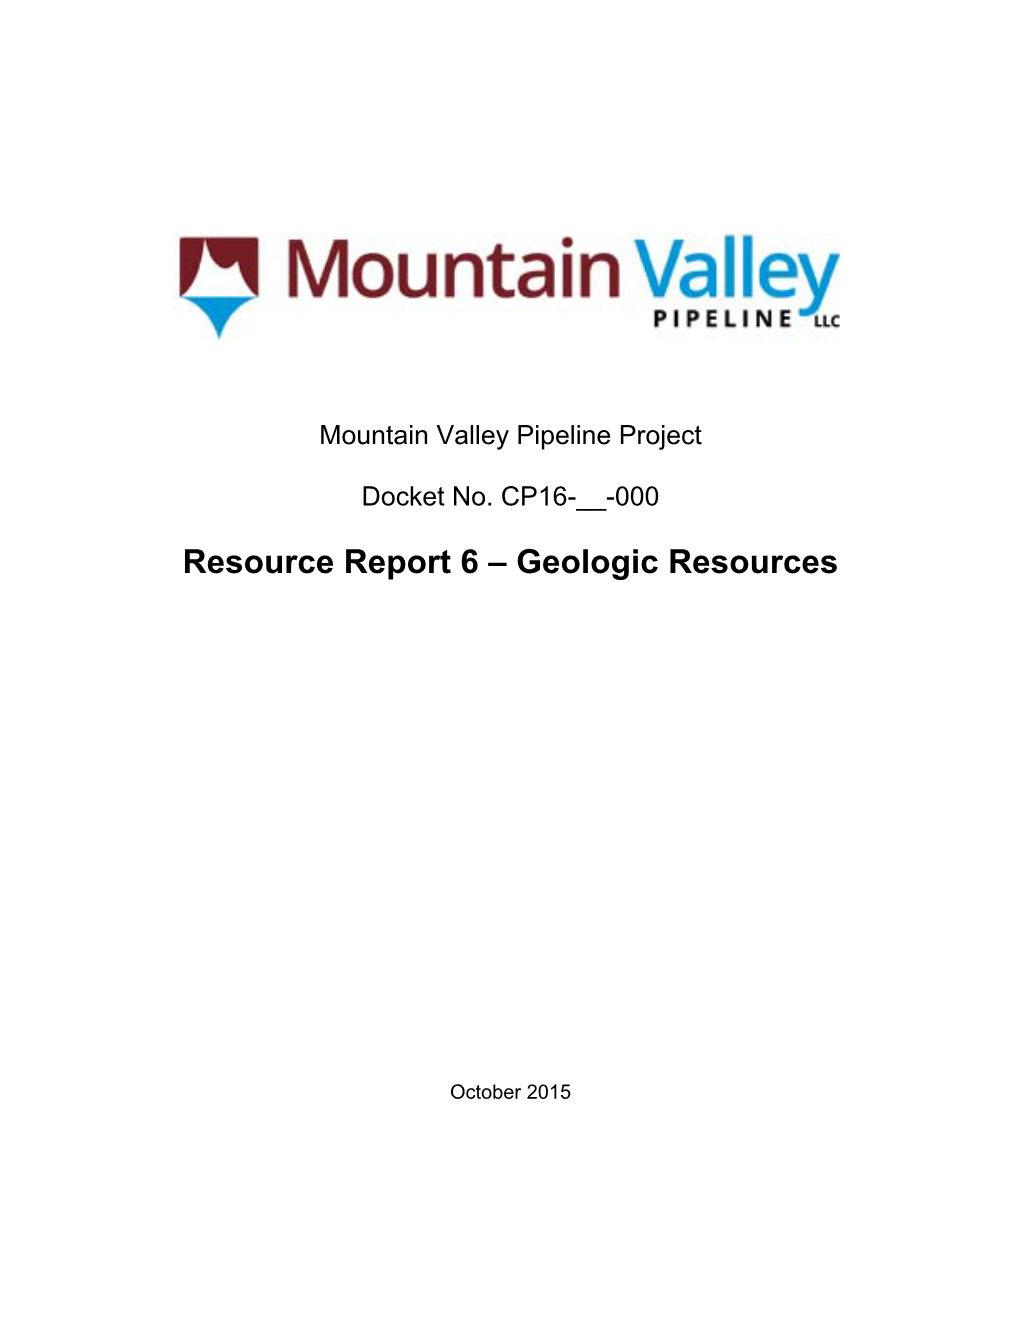 Resource Report 6 – Geologic Resources